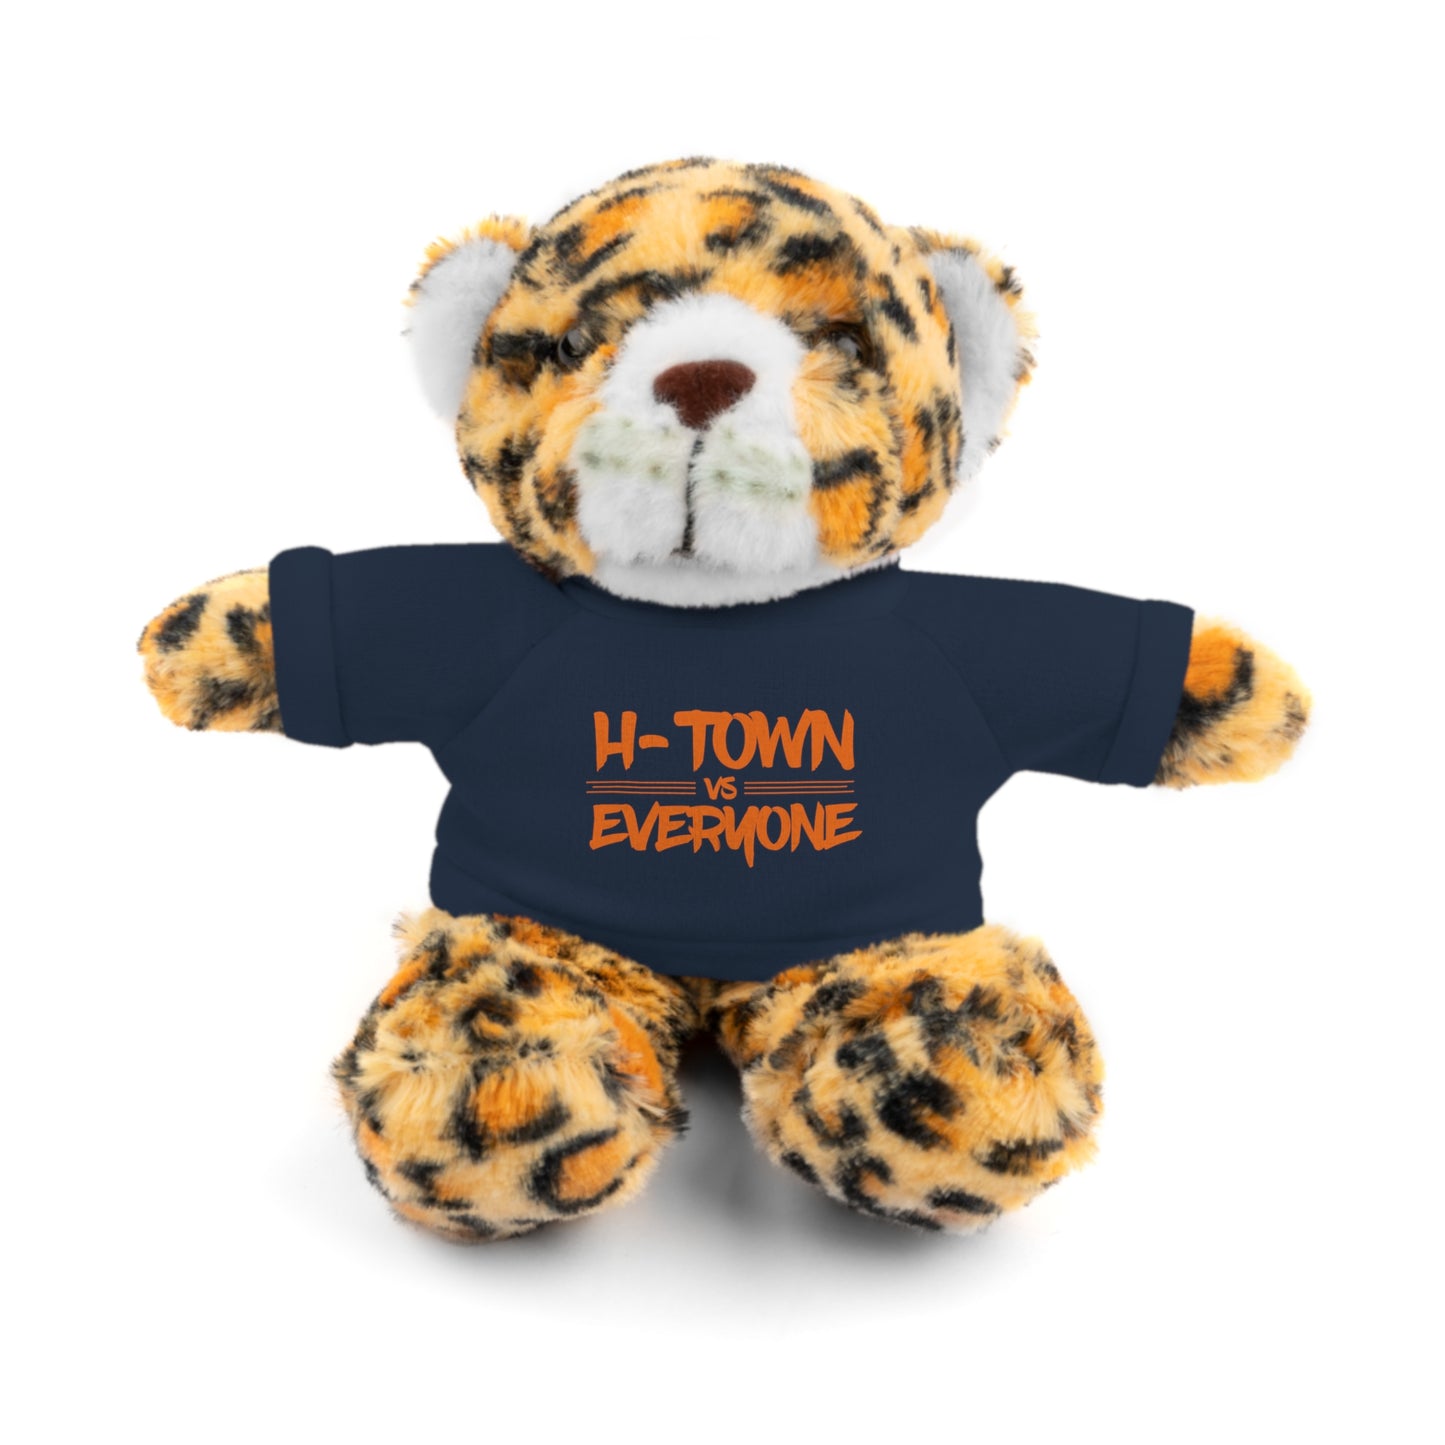 H-Town vs Everyone Stuffed Animal